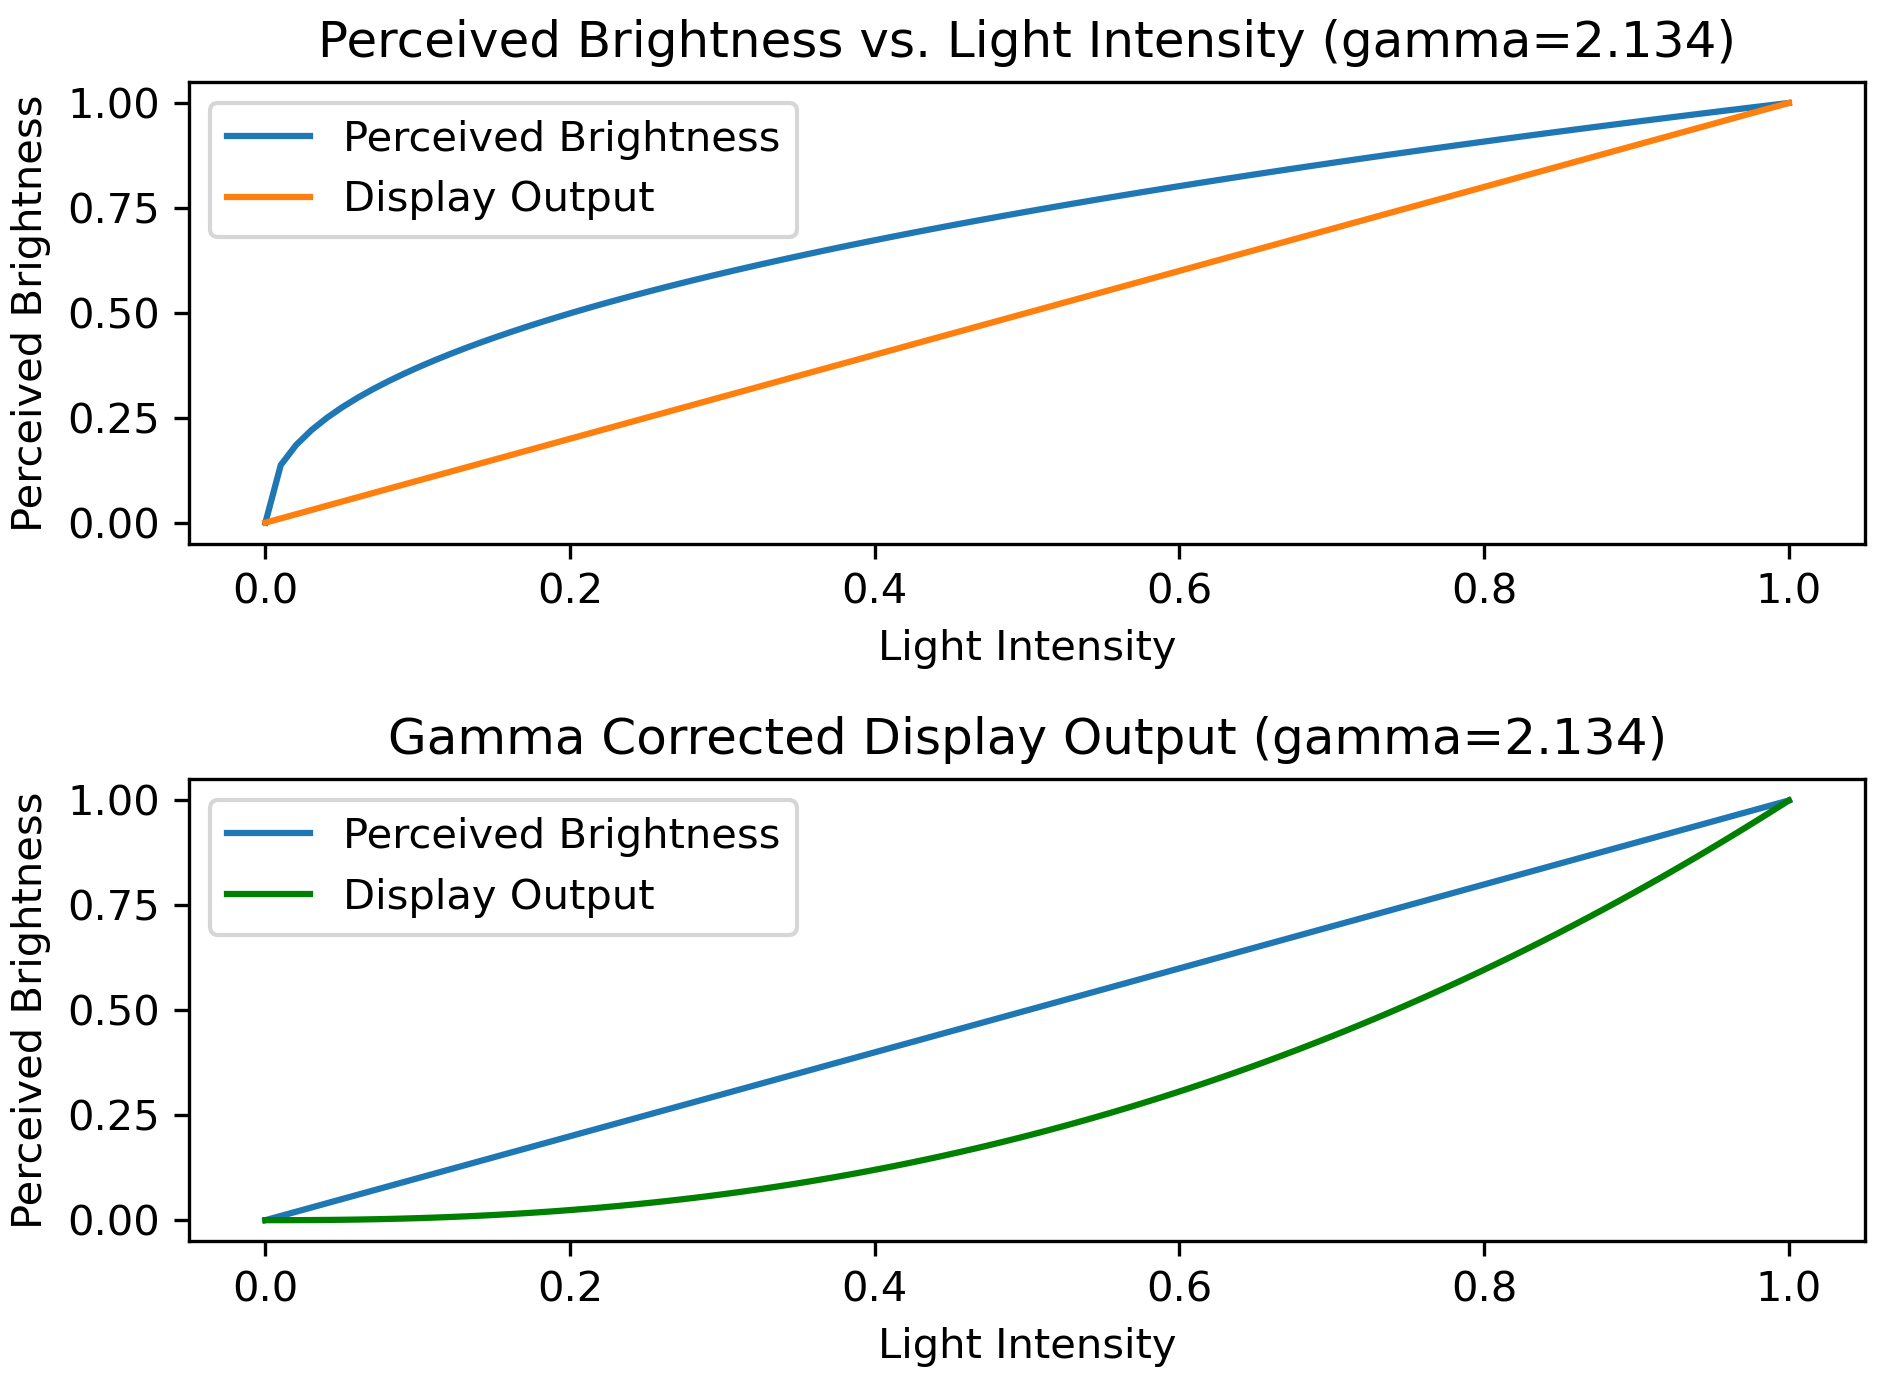 Lighting brightness perception of human eyes.